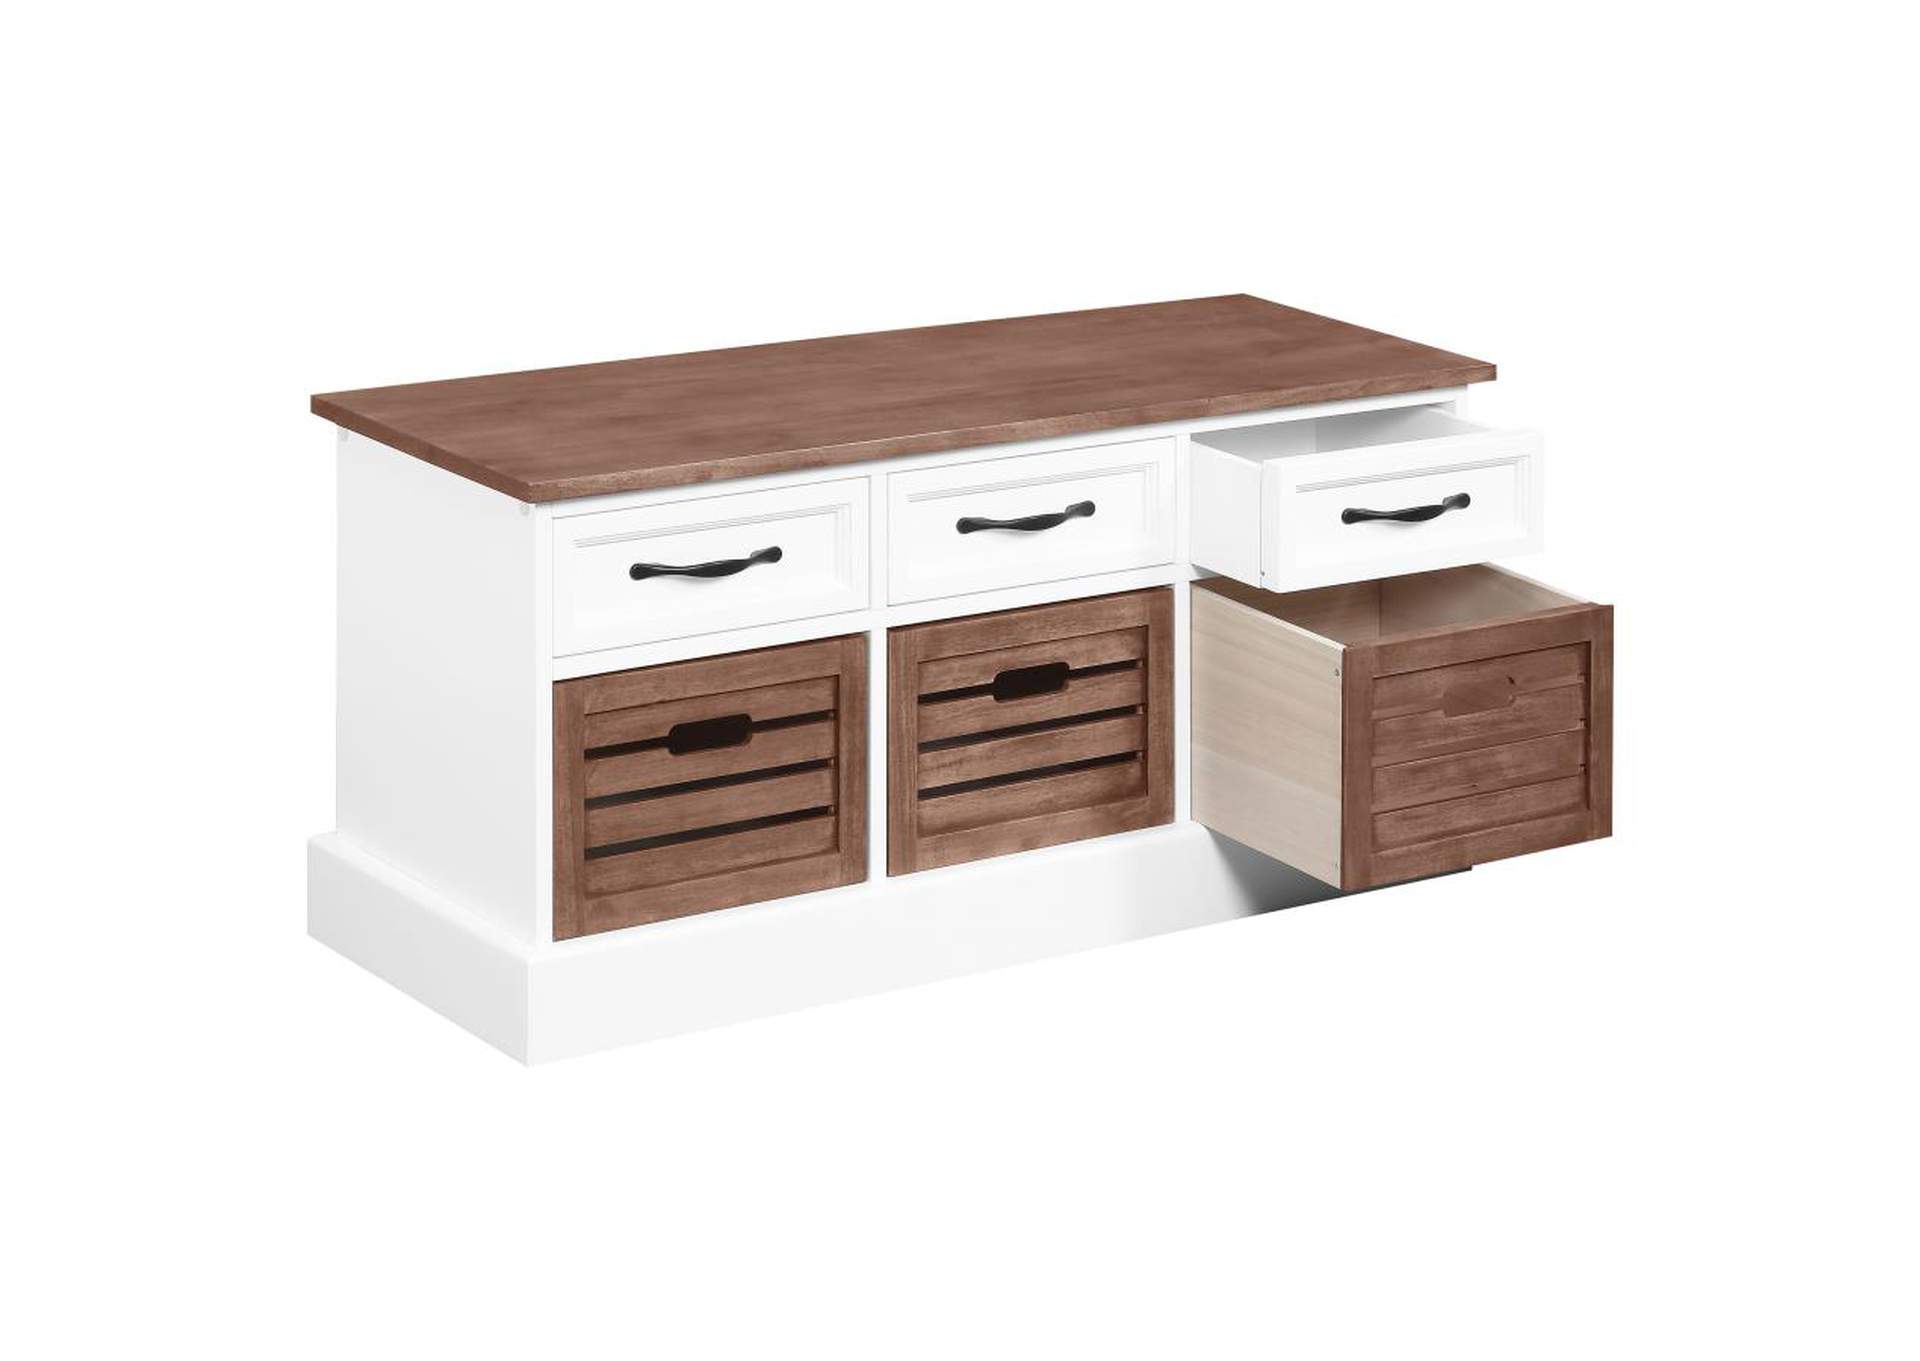 Alma 3 - drawer Storage Bench Weathered Brown and White,Coaster Furniture